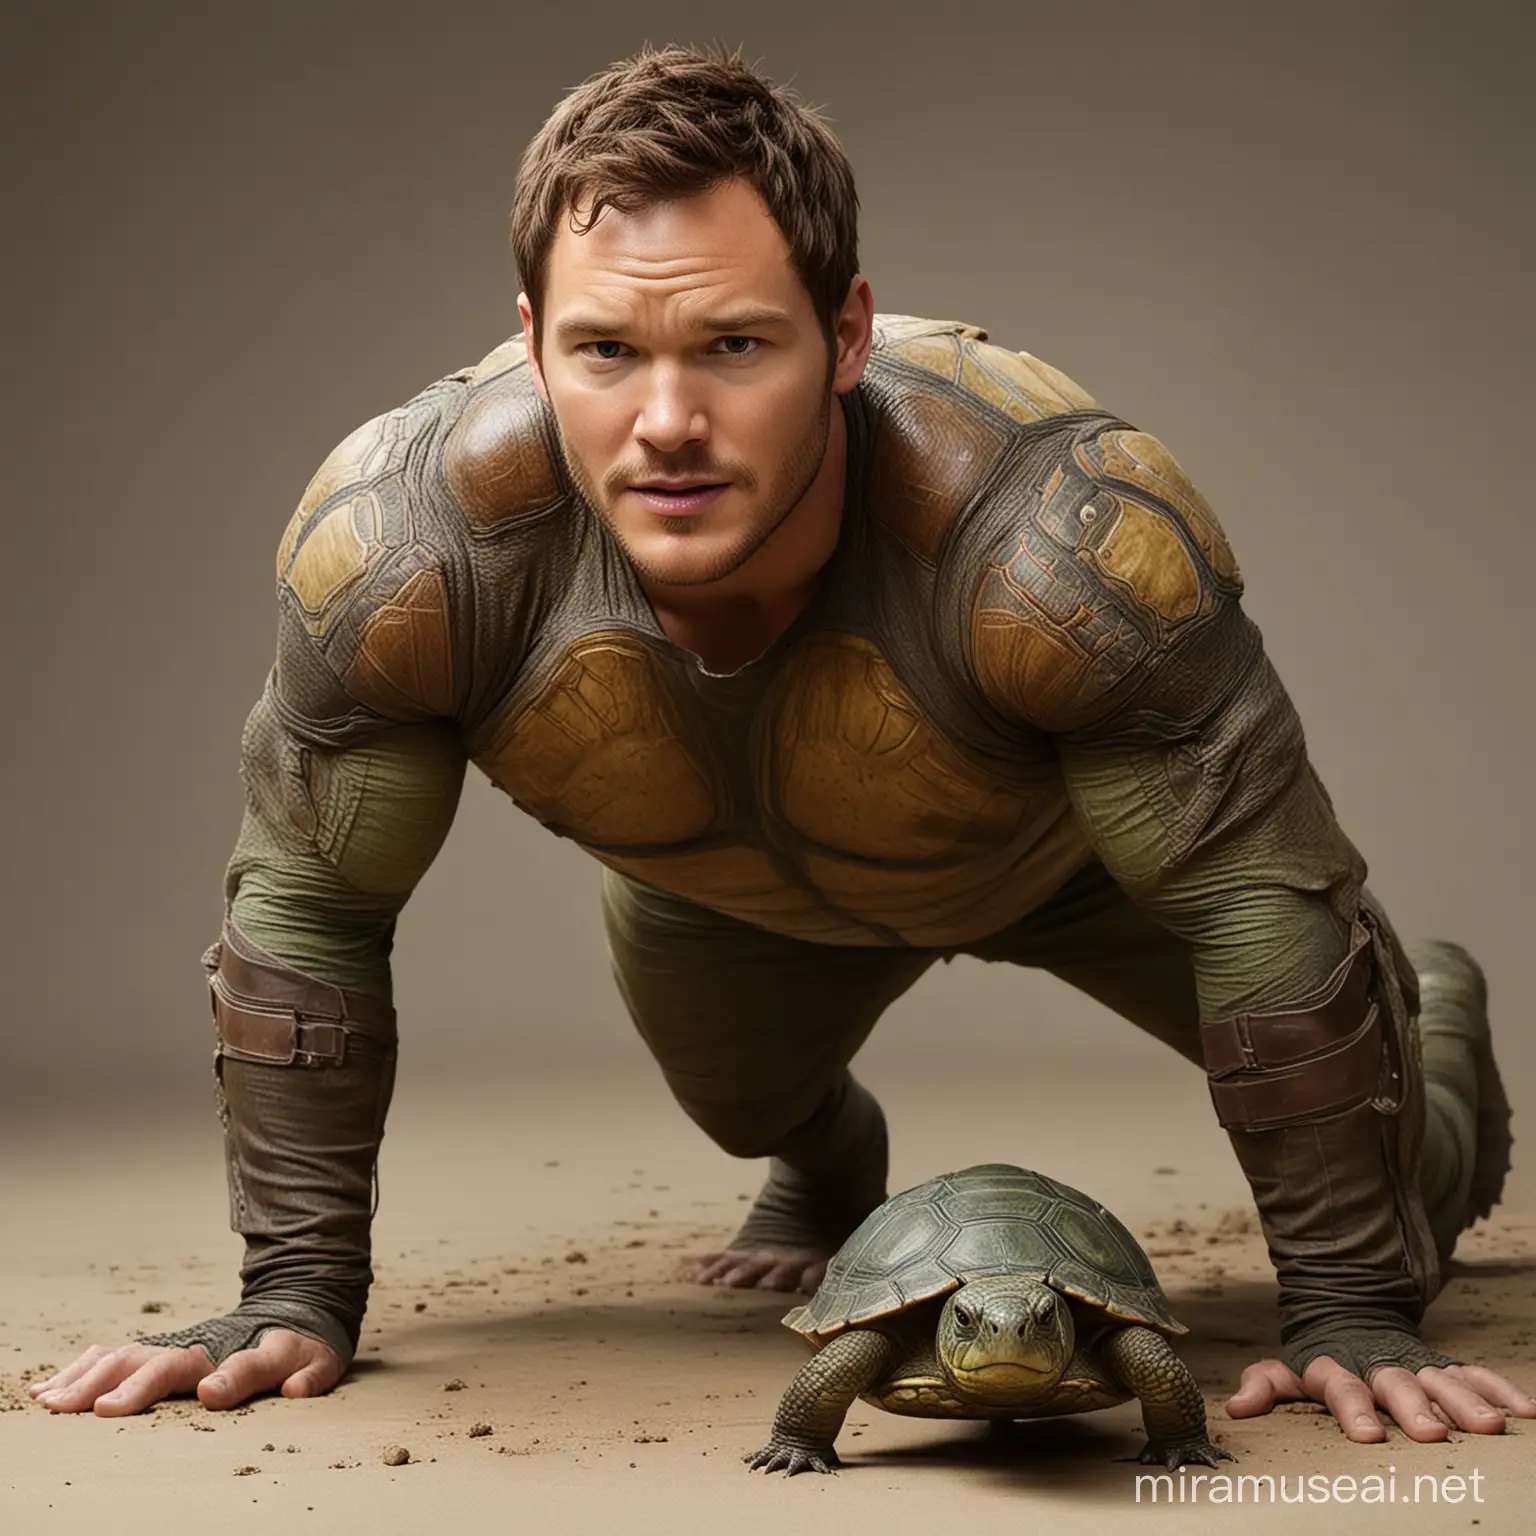 Celebrity Chris Pratt Transforming into a Green Turtle with Human Head